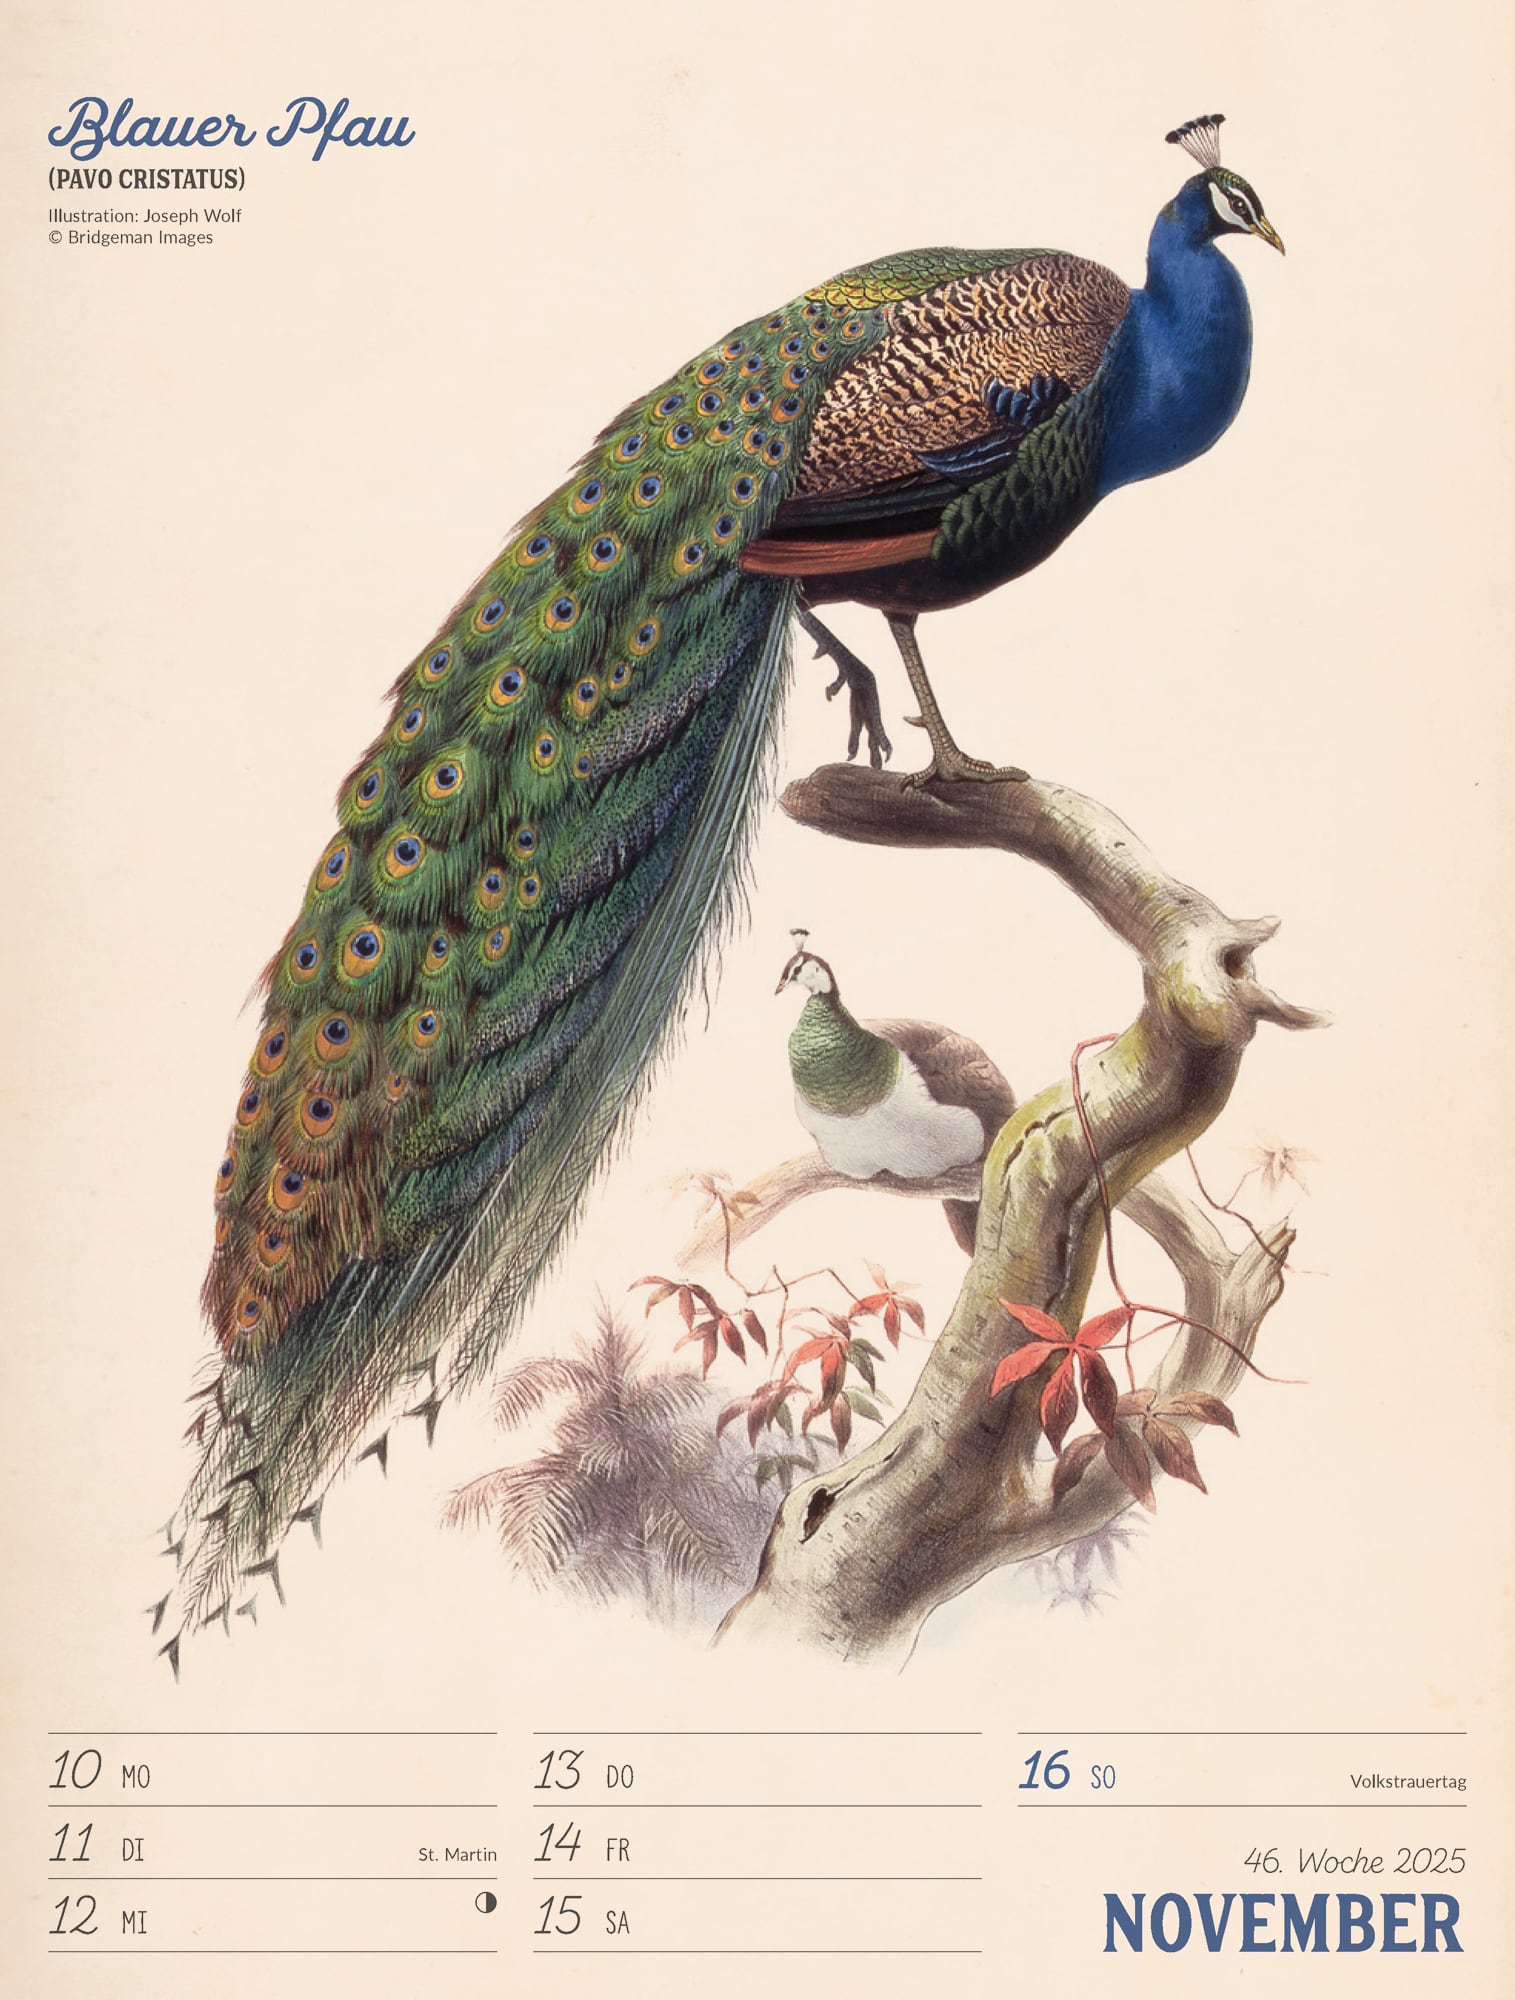 Ackermann Calendar The wonderful World of Birds 2025 - Weekly Planner - Inside View 49